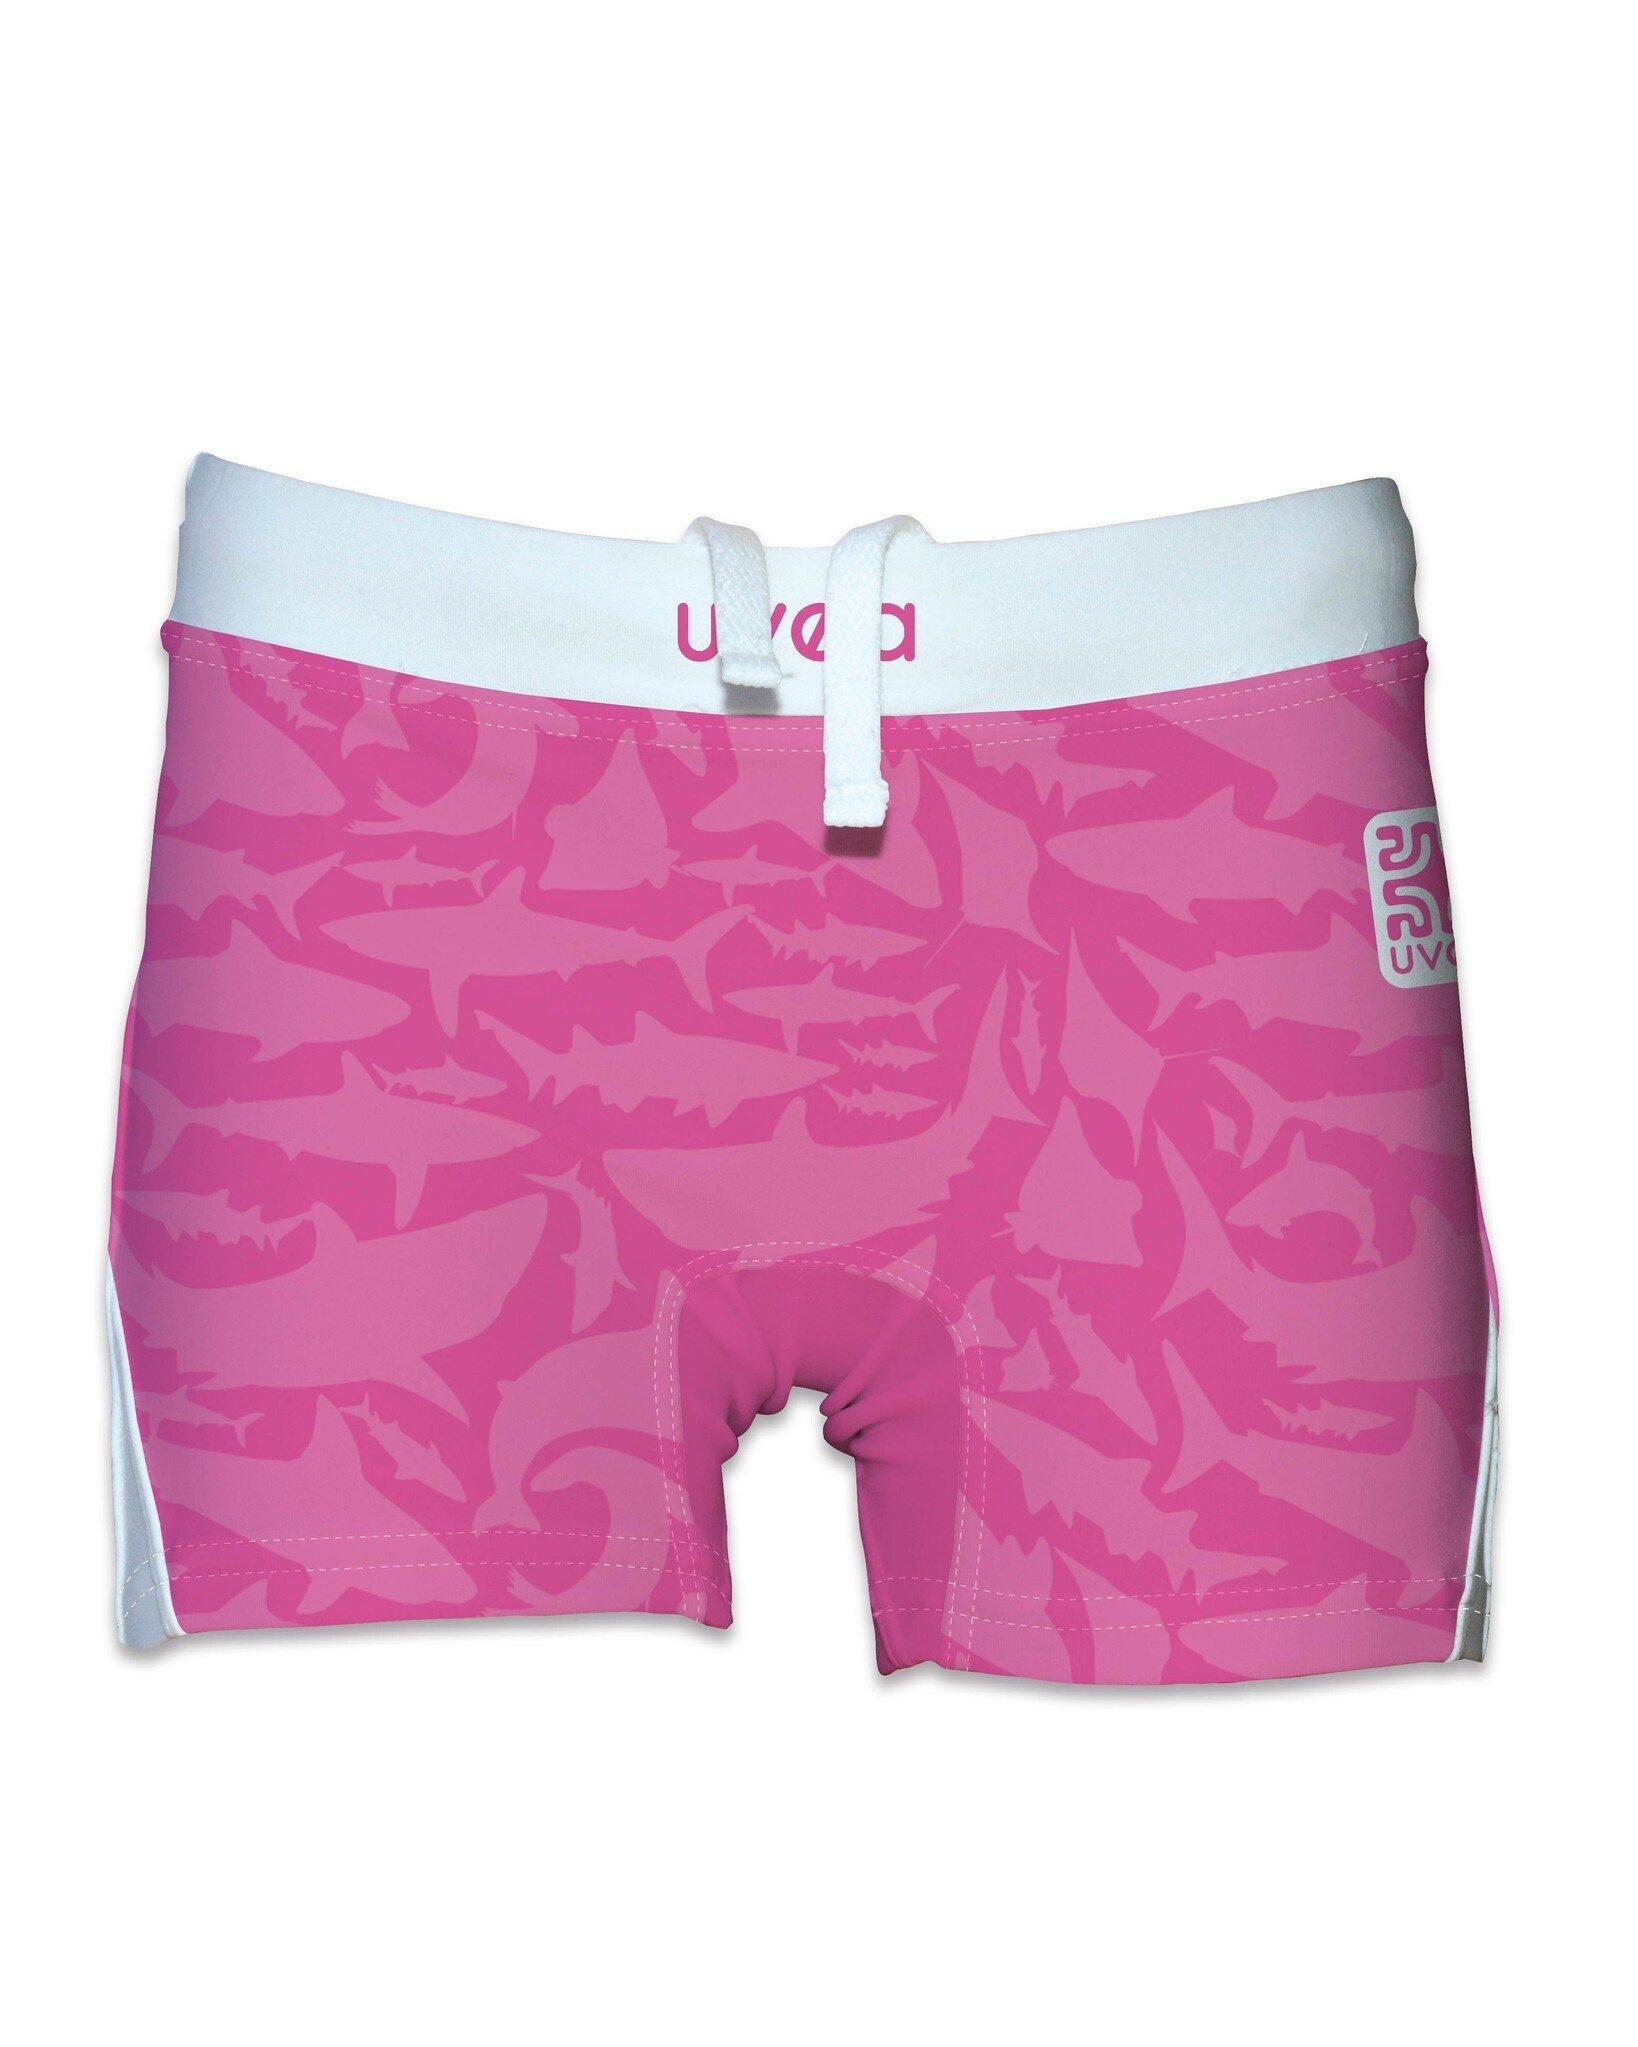 Kinder Upf 50+ Badehose Sydney Fuchsia Unisex Pink 74-80 von Uvea